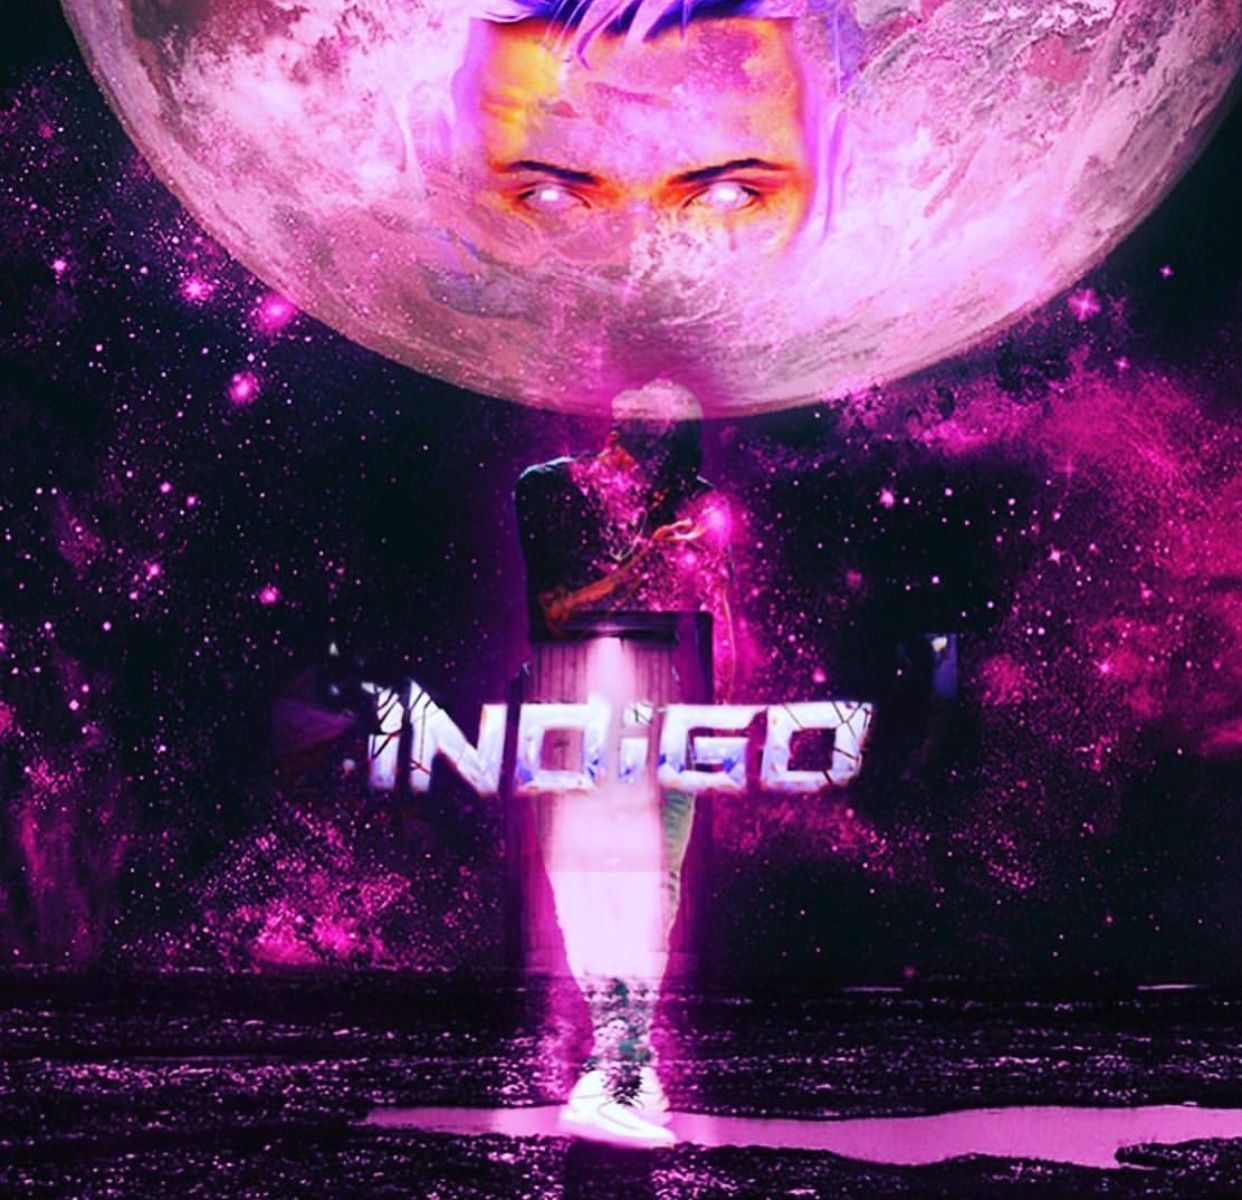 A poster for the movie indigo - Indigo